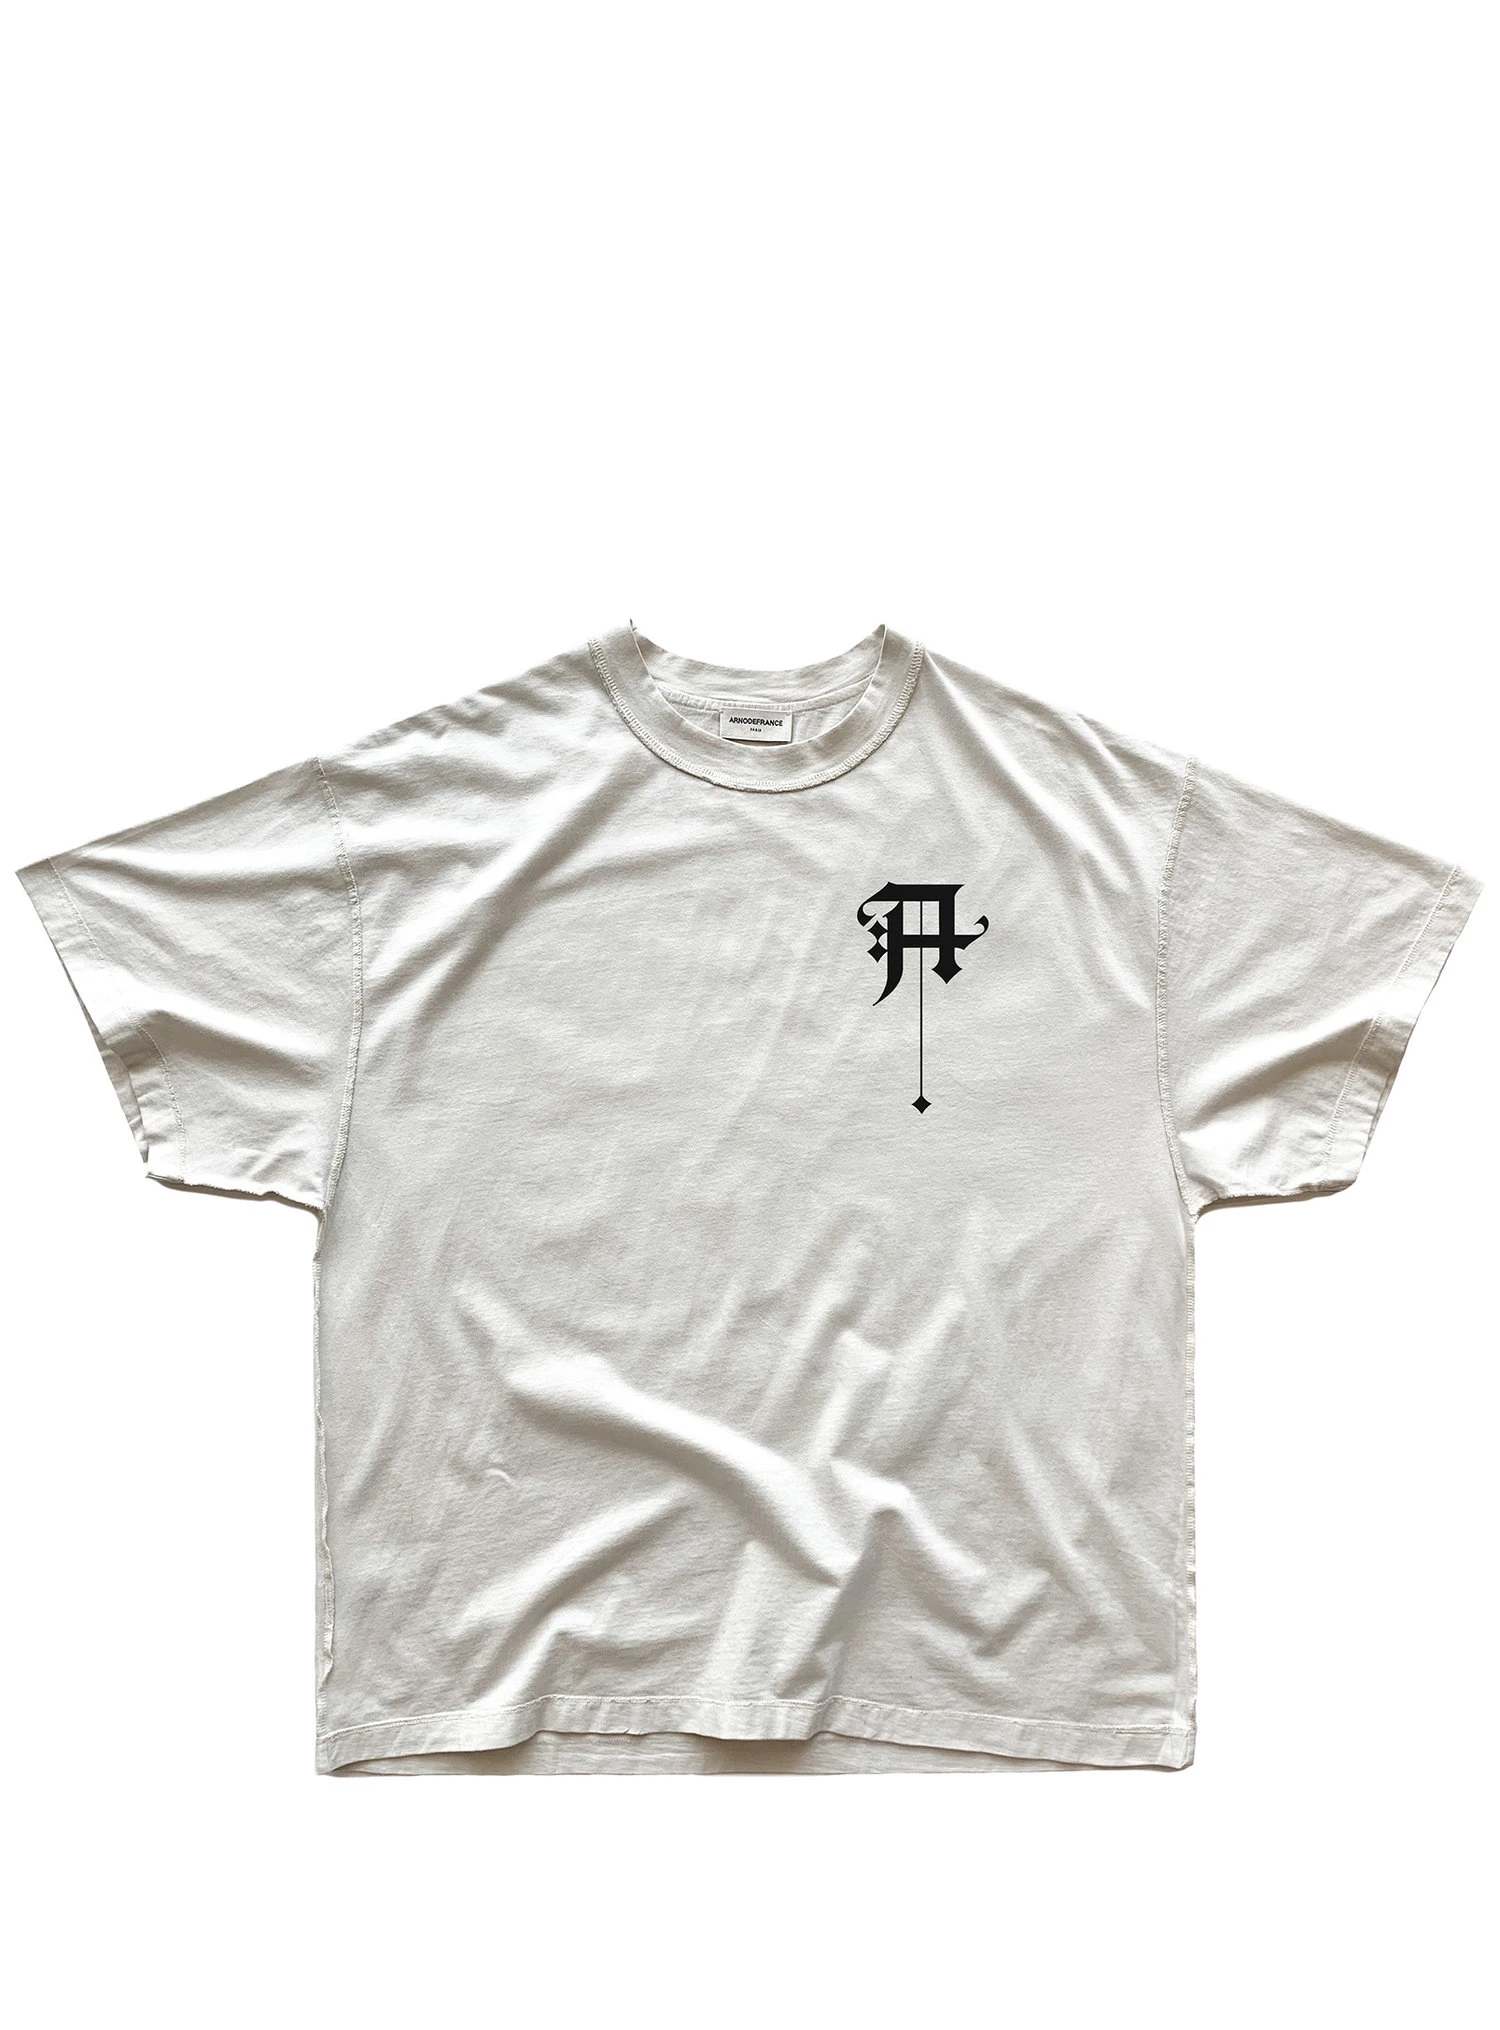 19SS ARNODEFRANCE футболка 1:1 Топ Версия Harajuku хлопок топ в стиле "оверсайз" футболки для девочек для мужчин женщин High Street Хип Хоп туман